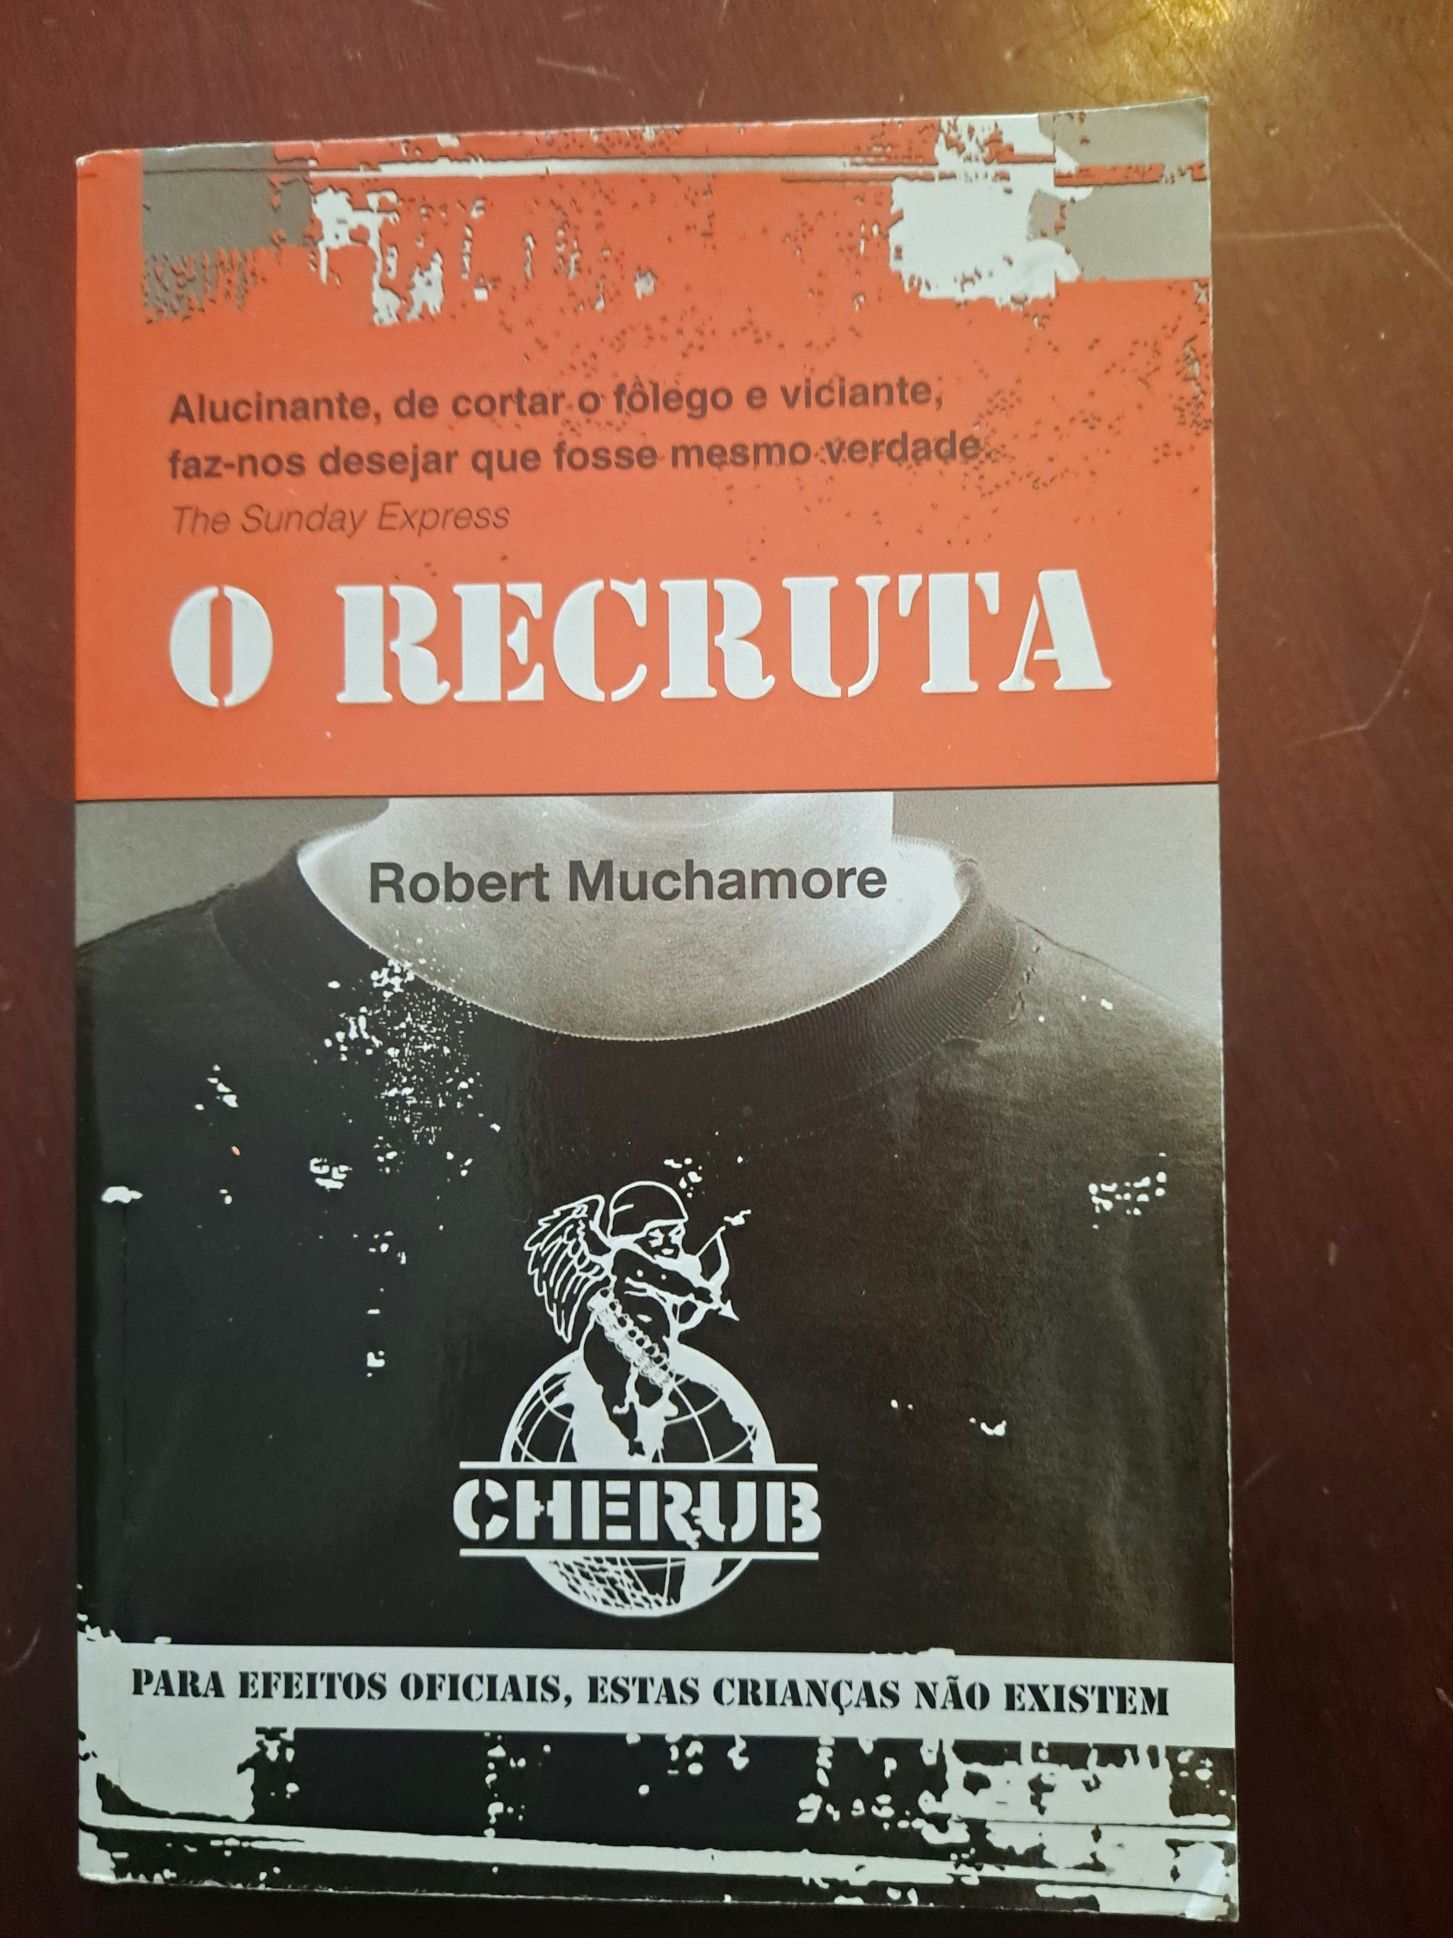 Livro "O Recruta" de Robert Muchamore